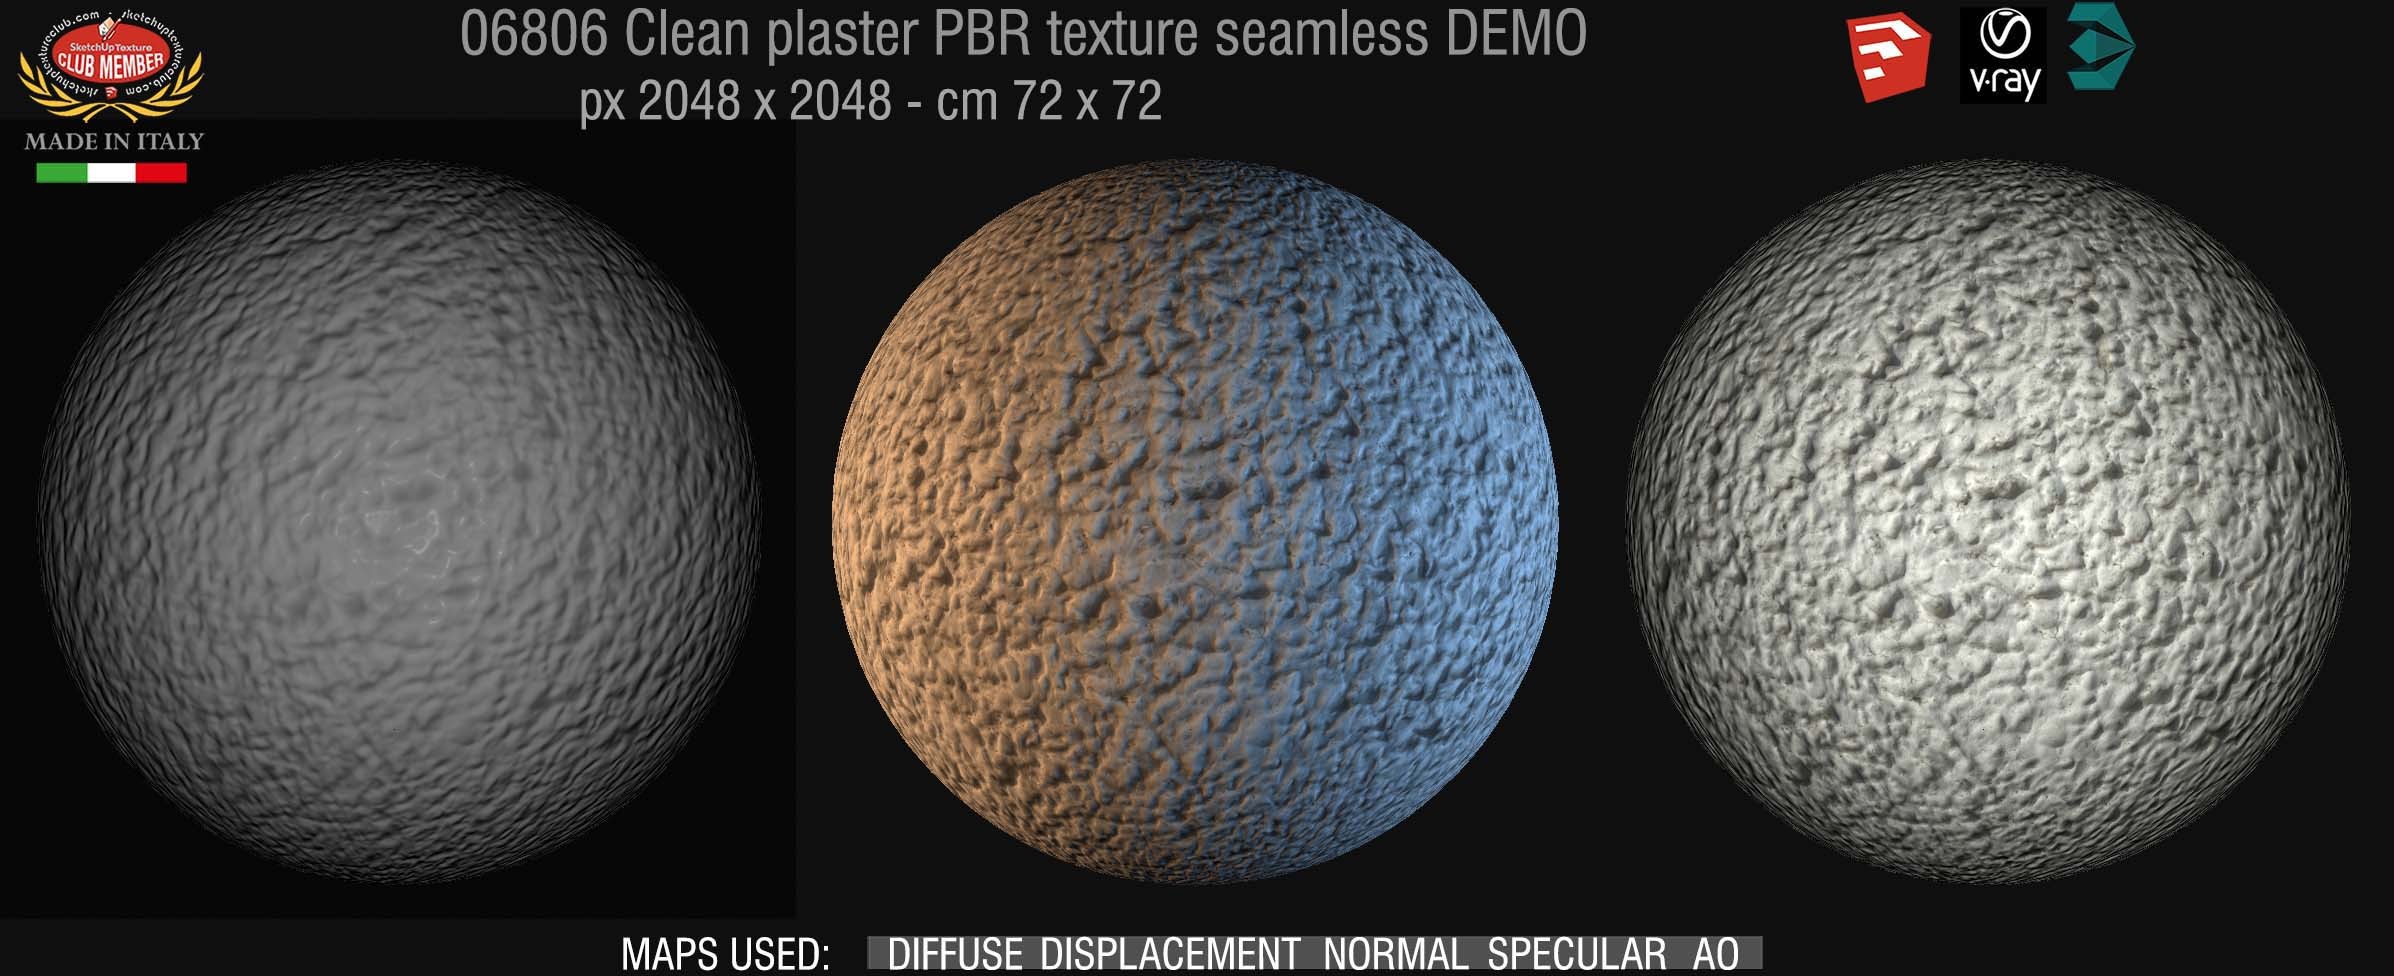 06806 clean plaster PBR texture seamless DEMO